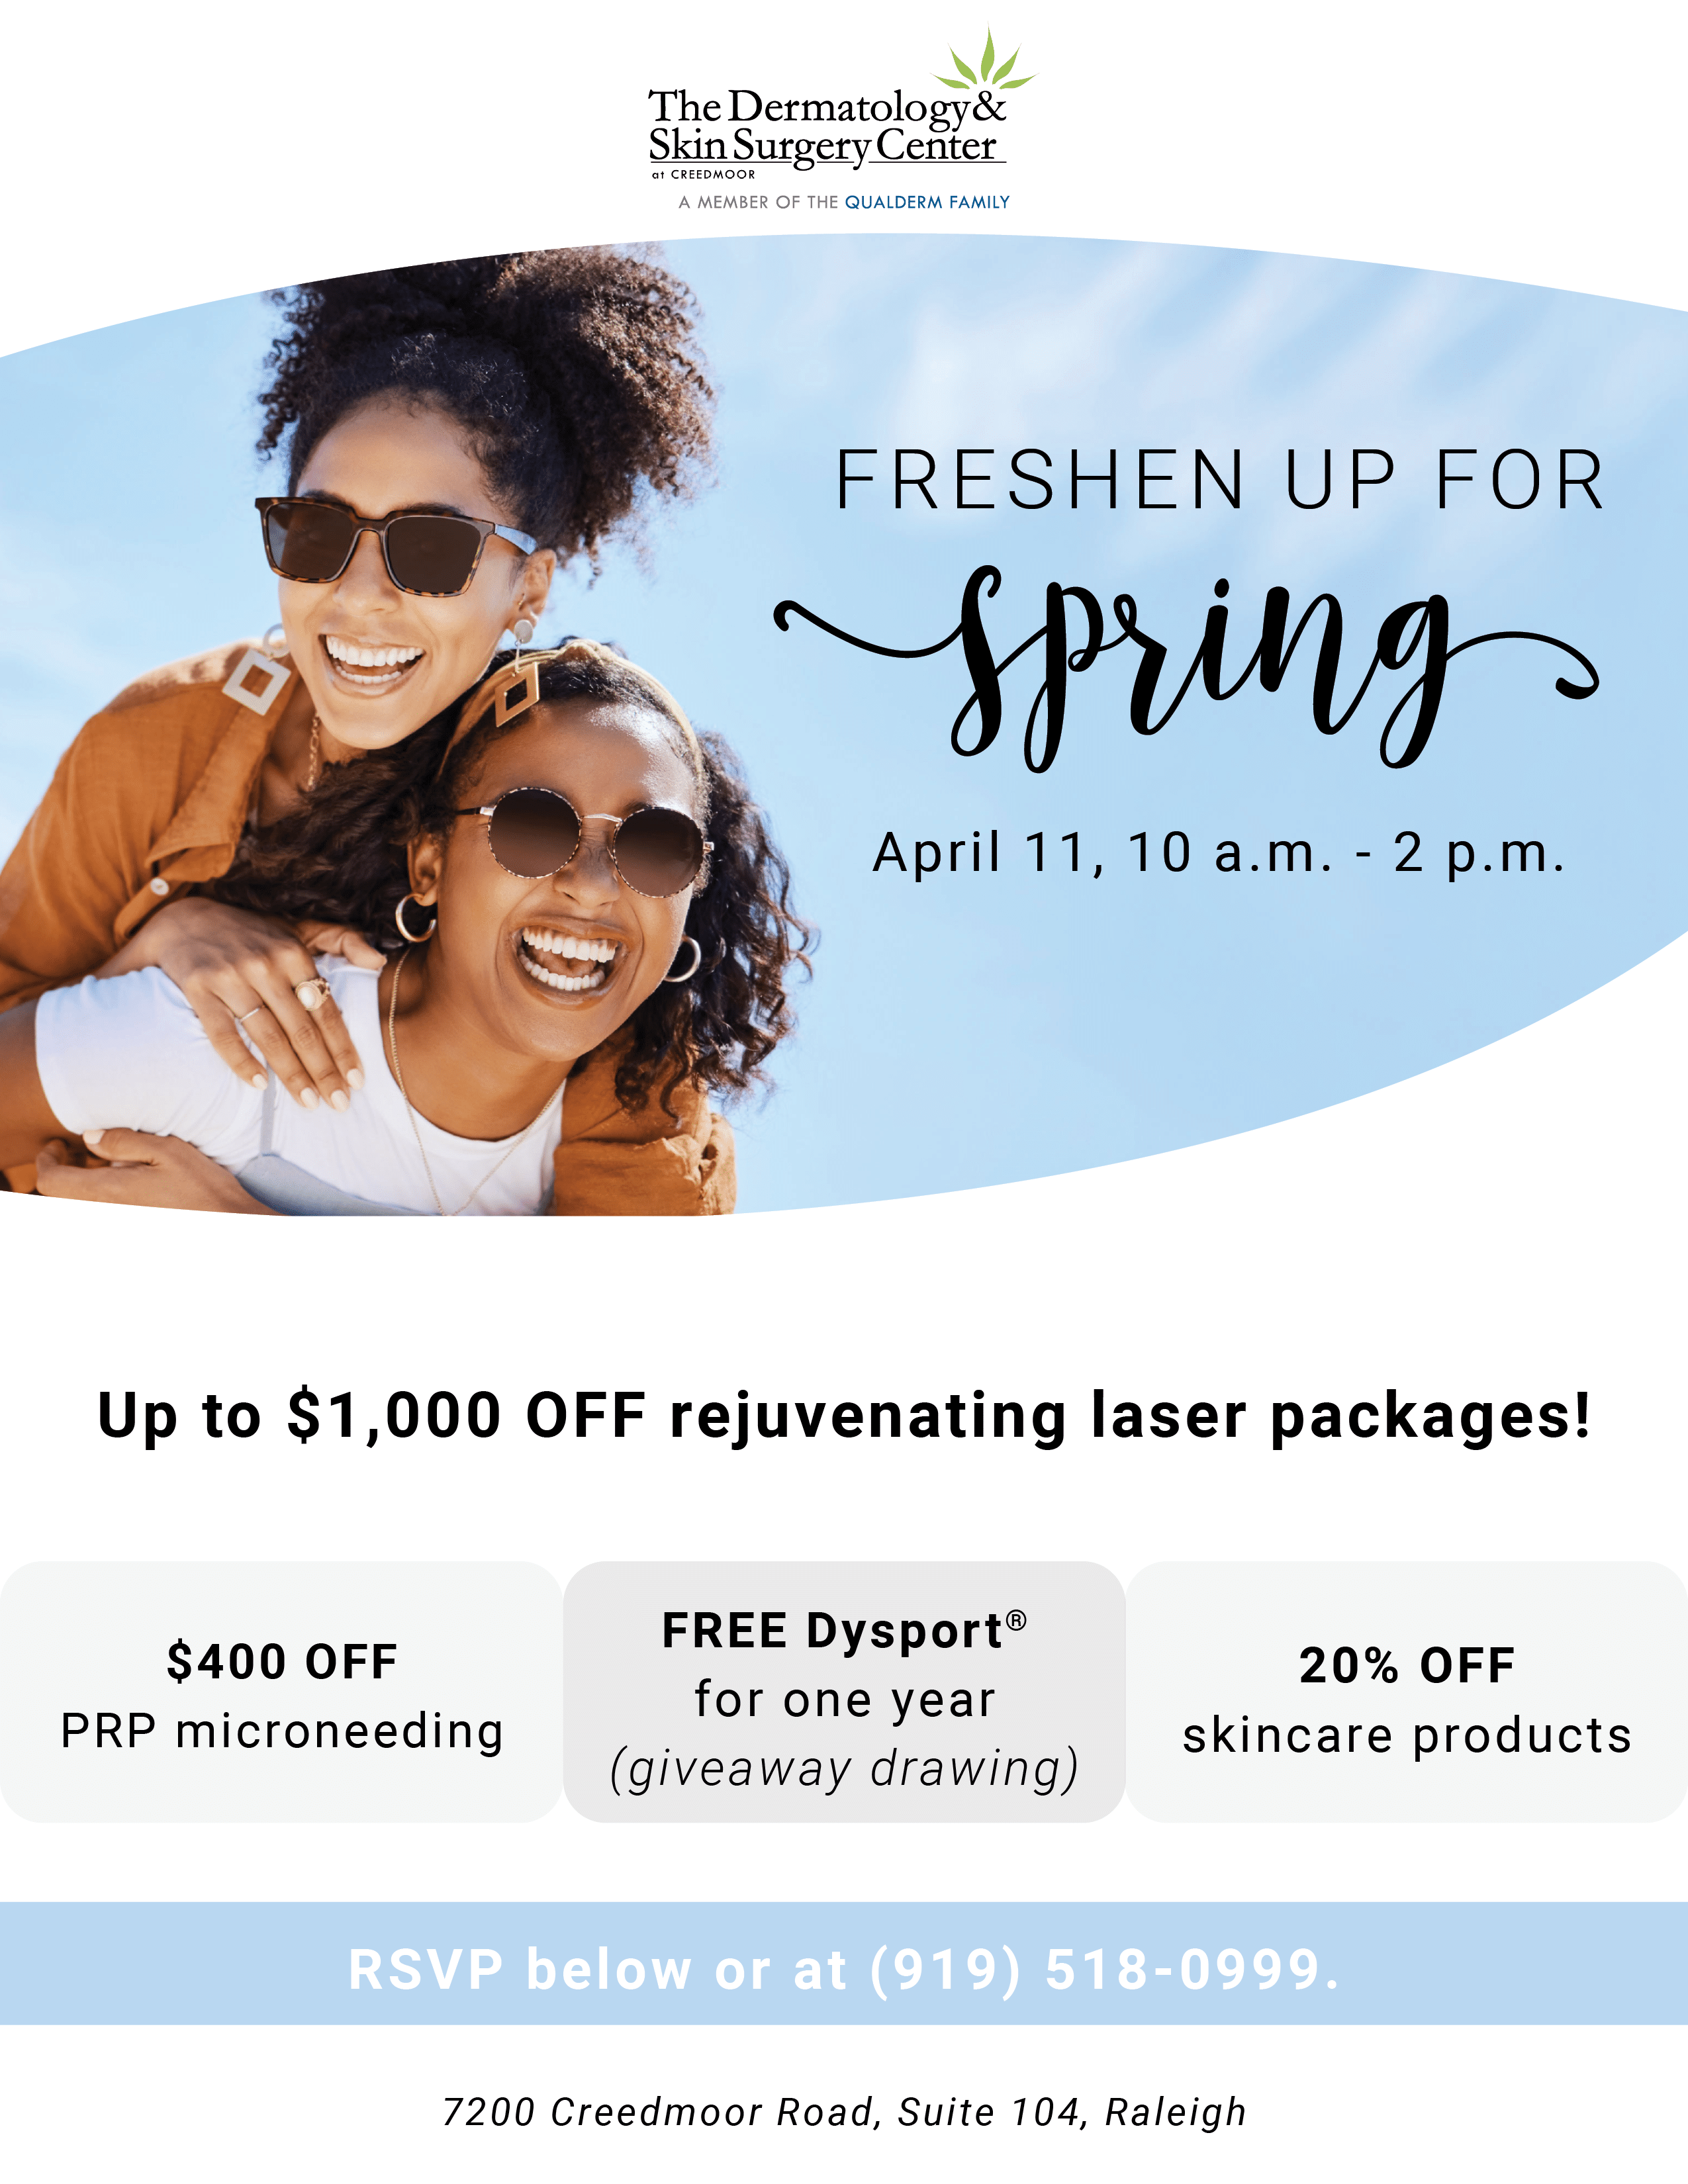 Fresh Up For Spring, April 11, 10 am to 2 pm, up to $1000 off rejuvenating laser packages